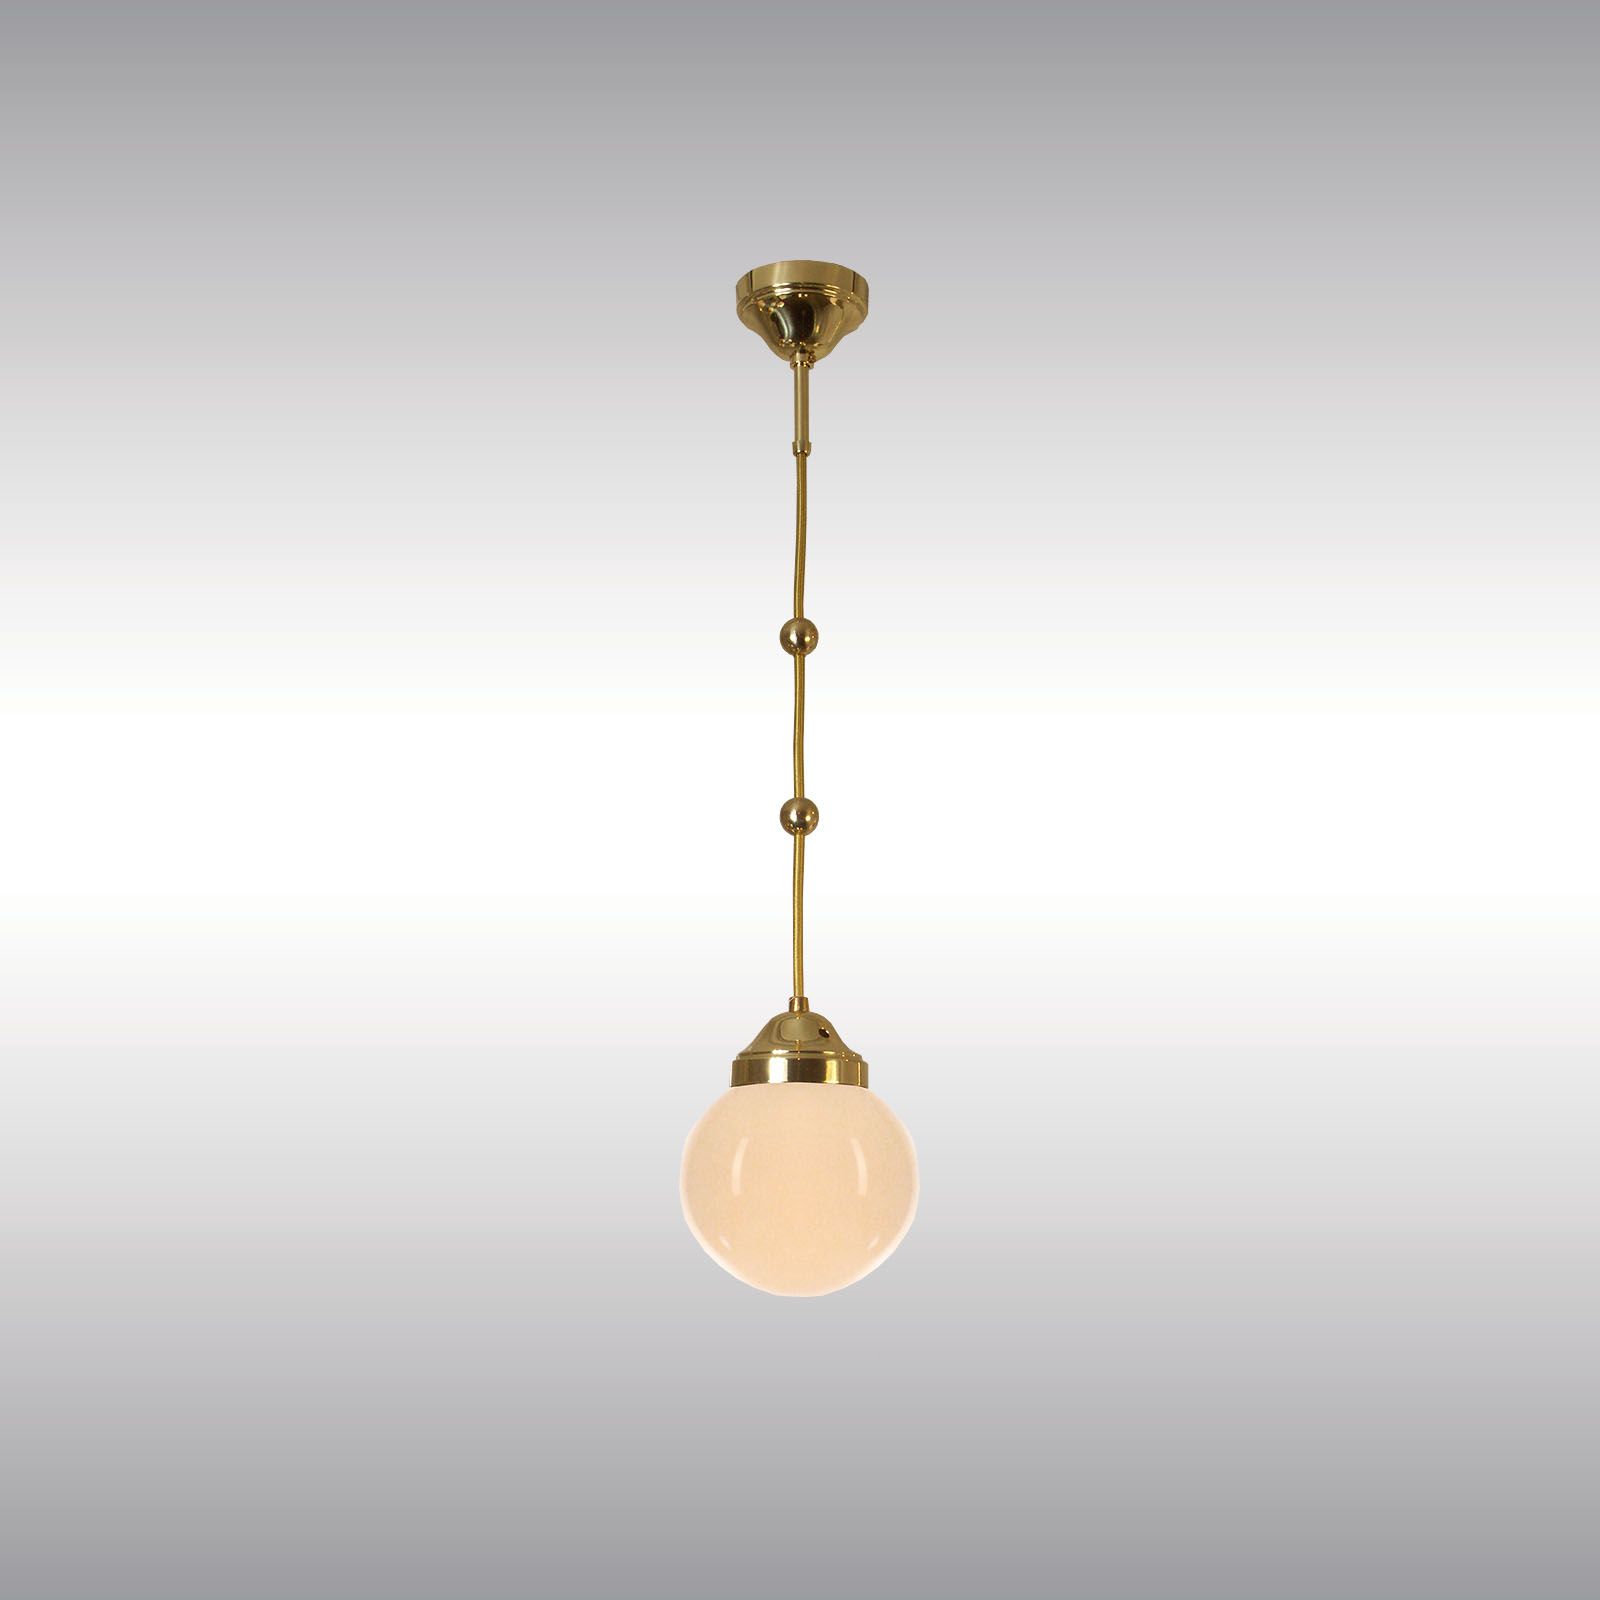 WOKA LAMPS VIENNA - OrderNr.: 20325|KM-Pende - Design: Koloman (Kolo) Moser